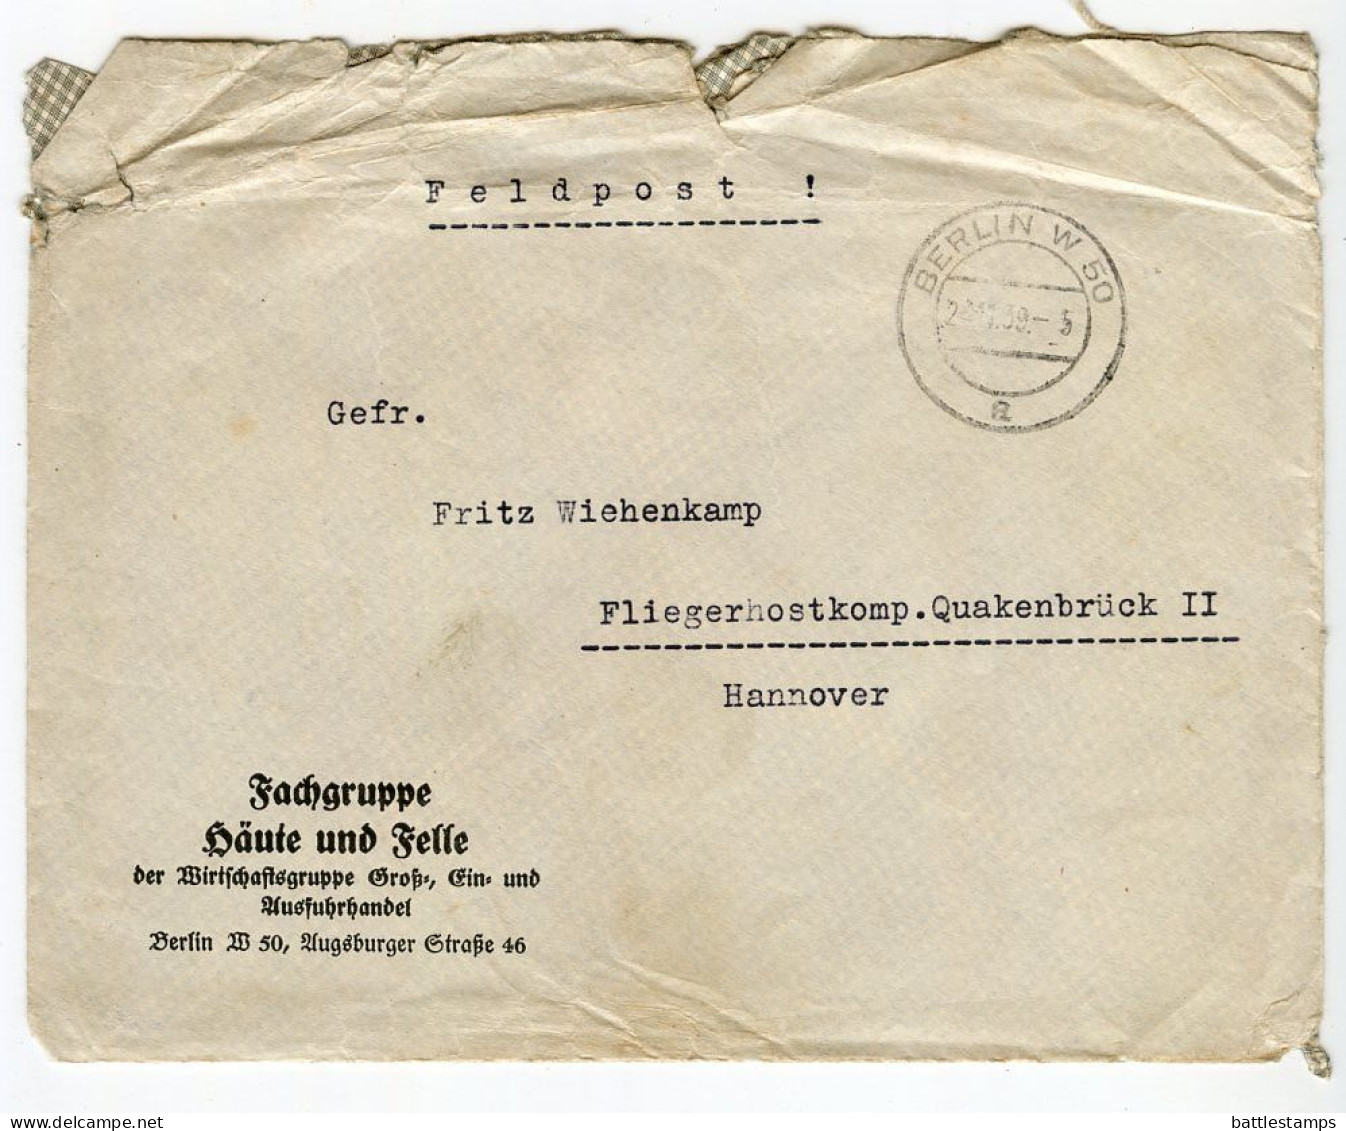 Germany 1939 WWII Feldpost Cover; Berlin To Fliergerhostkomp. Quakenbrück II, Hannover - Fritz Wiehenkamp - Feldpost 2da Guerra Mundial